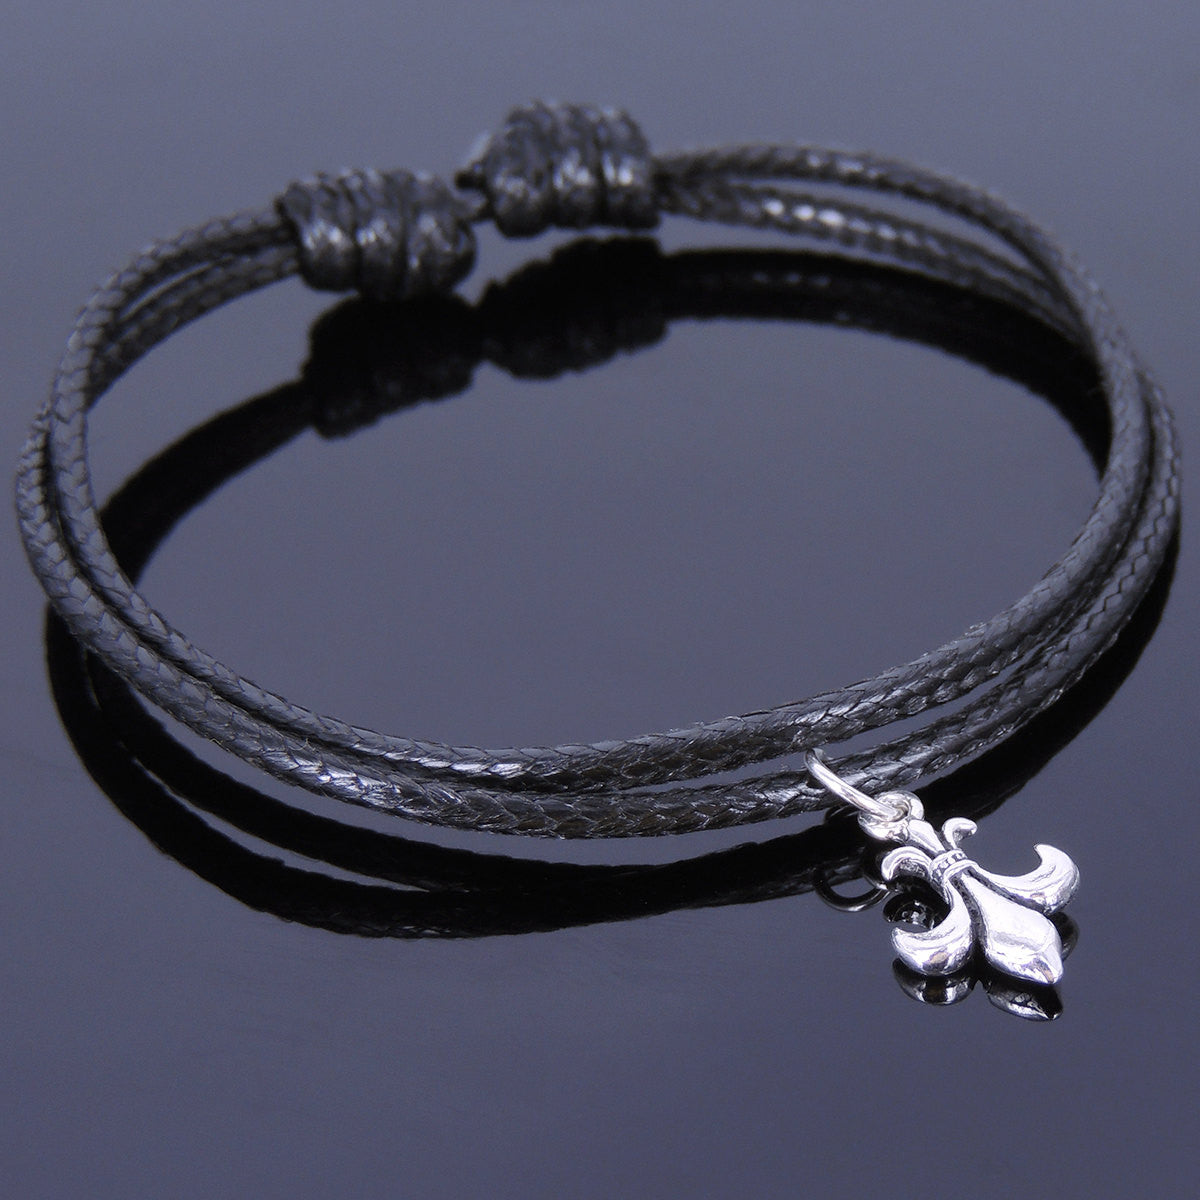 Adjustable Wax Rope Bracelet with S925 Sterling Silver Fleur de Lis Pendant - Handmade by Gem & Silver BR416